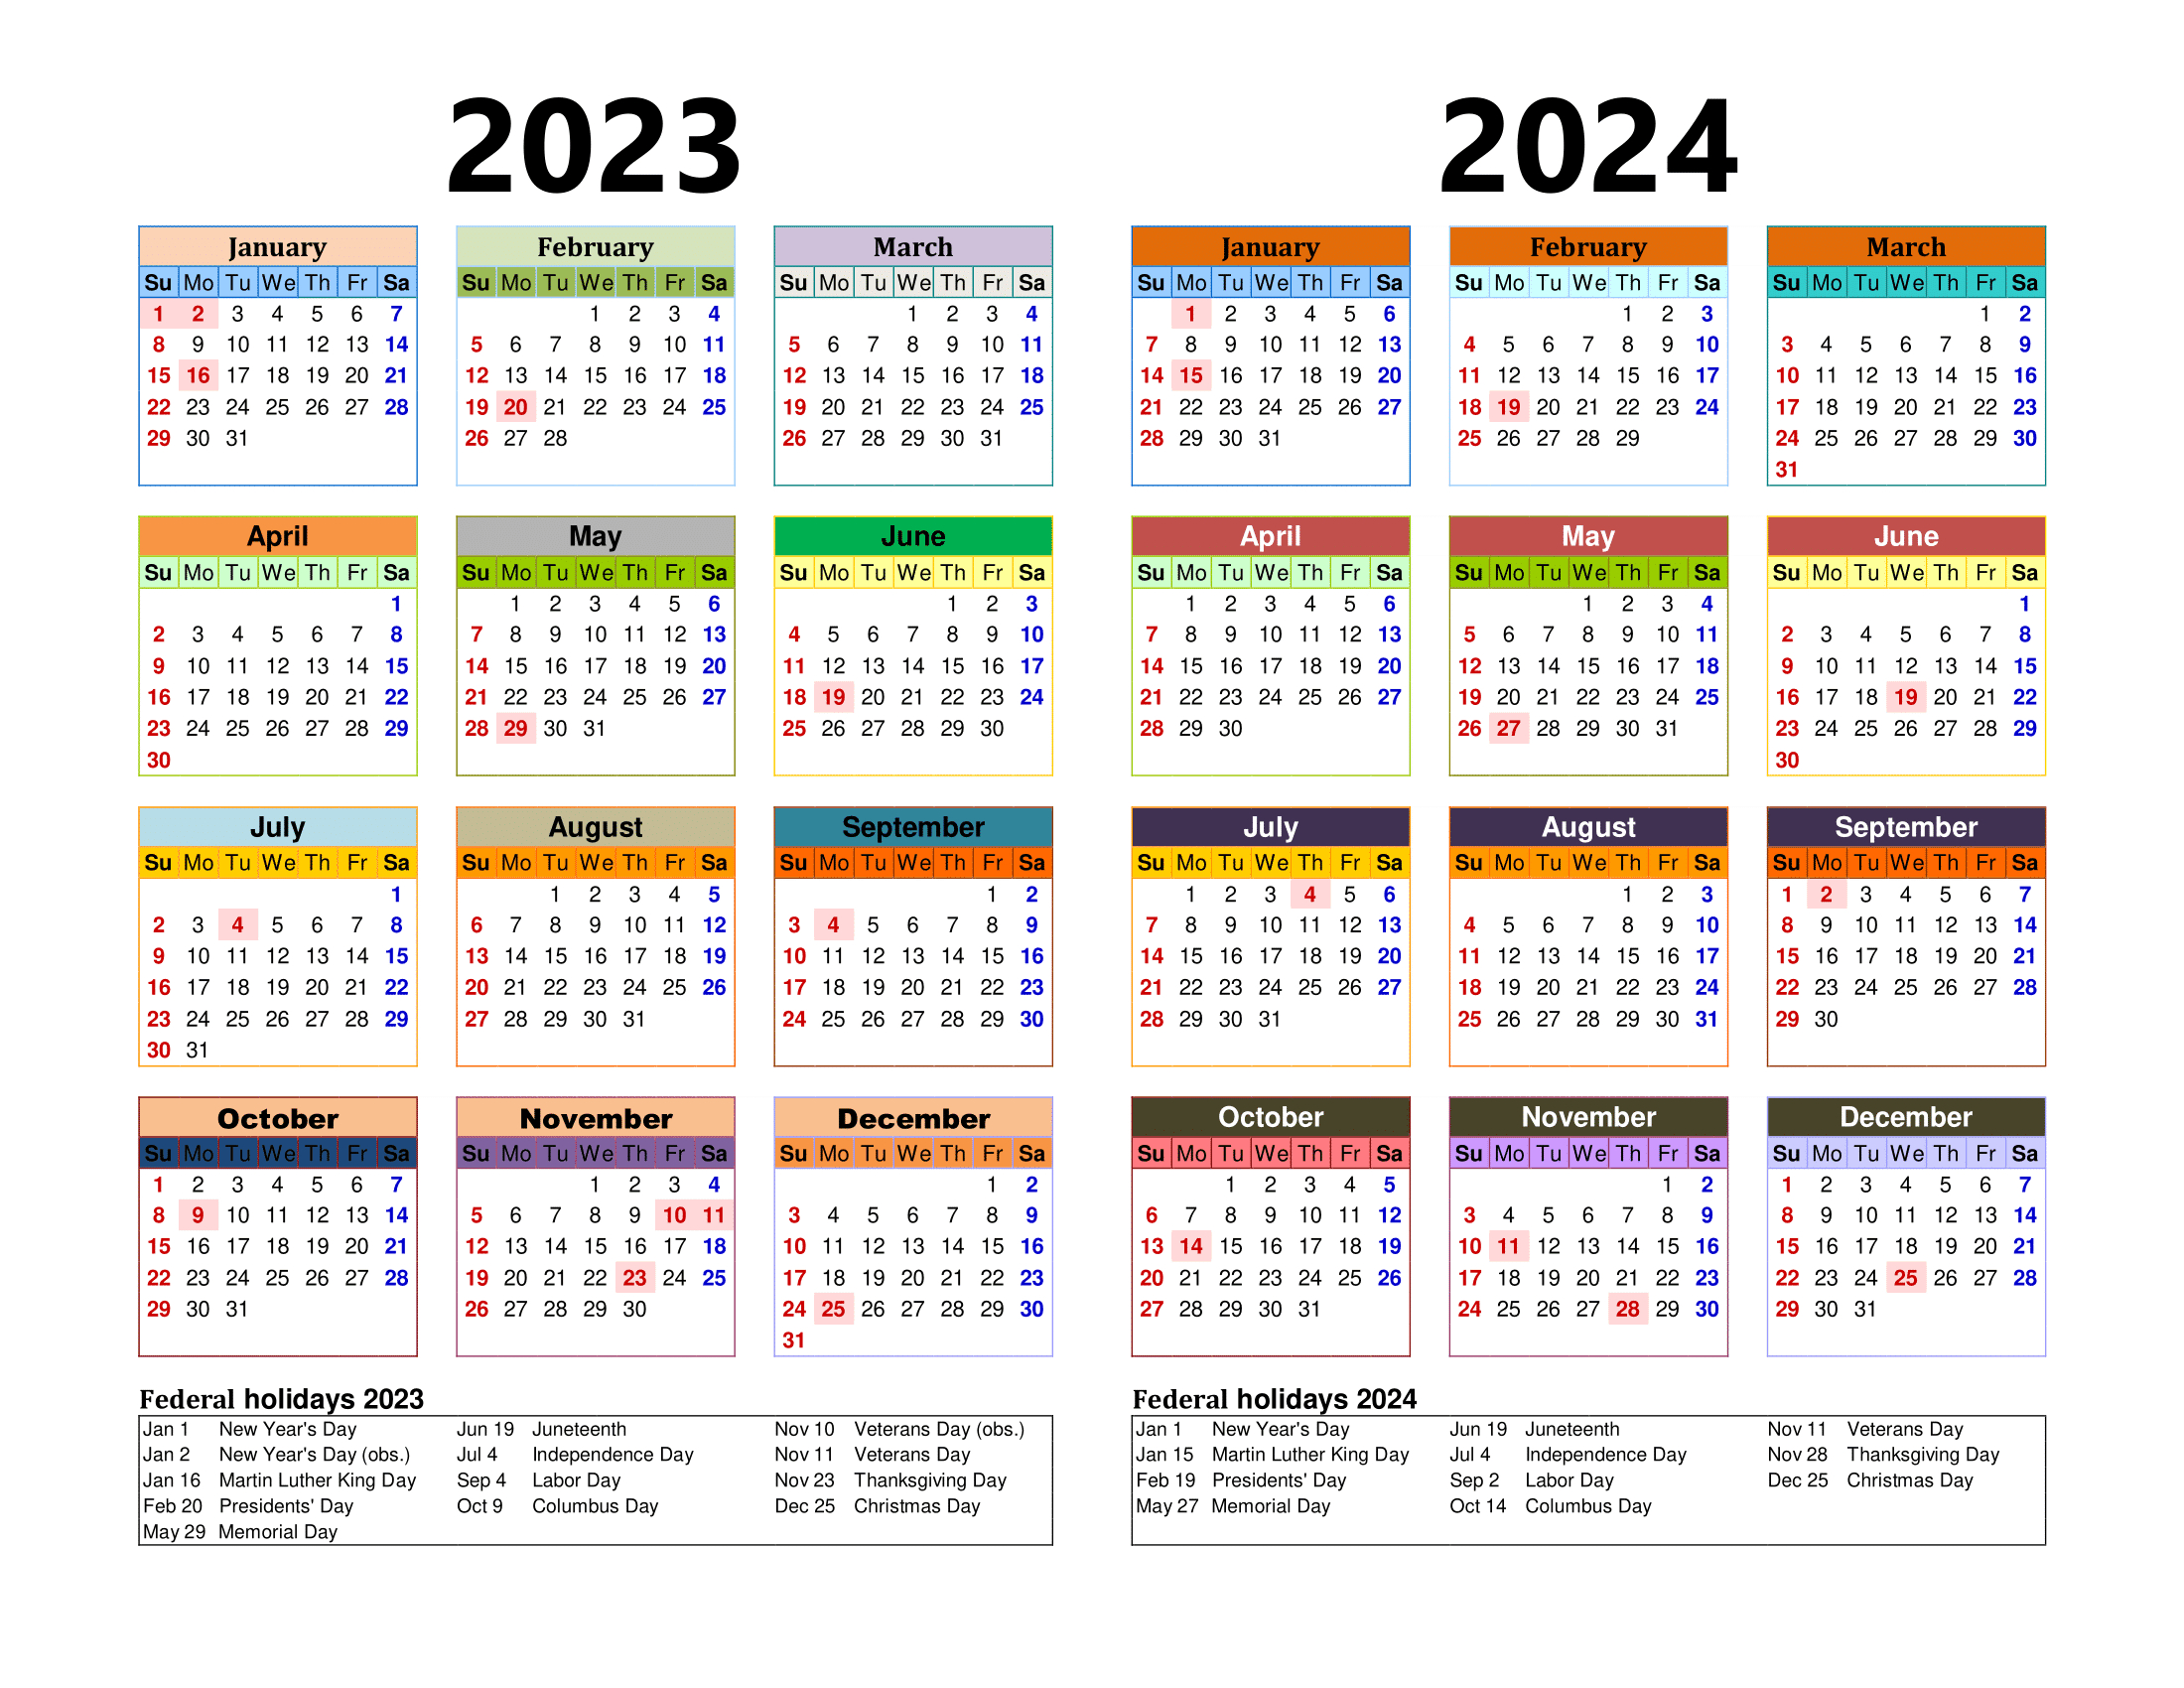 Free Printable Two Year Calendar Templates For 2023 And 2024 In Pdf | Printable Calendar 2024 Hong Kong